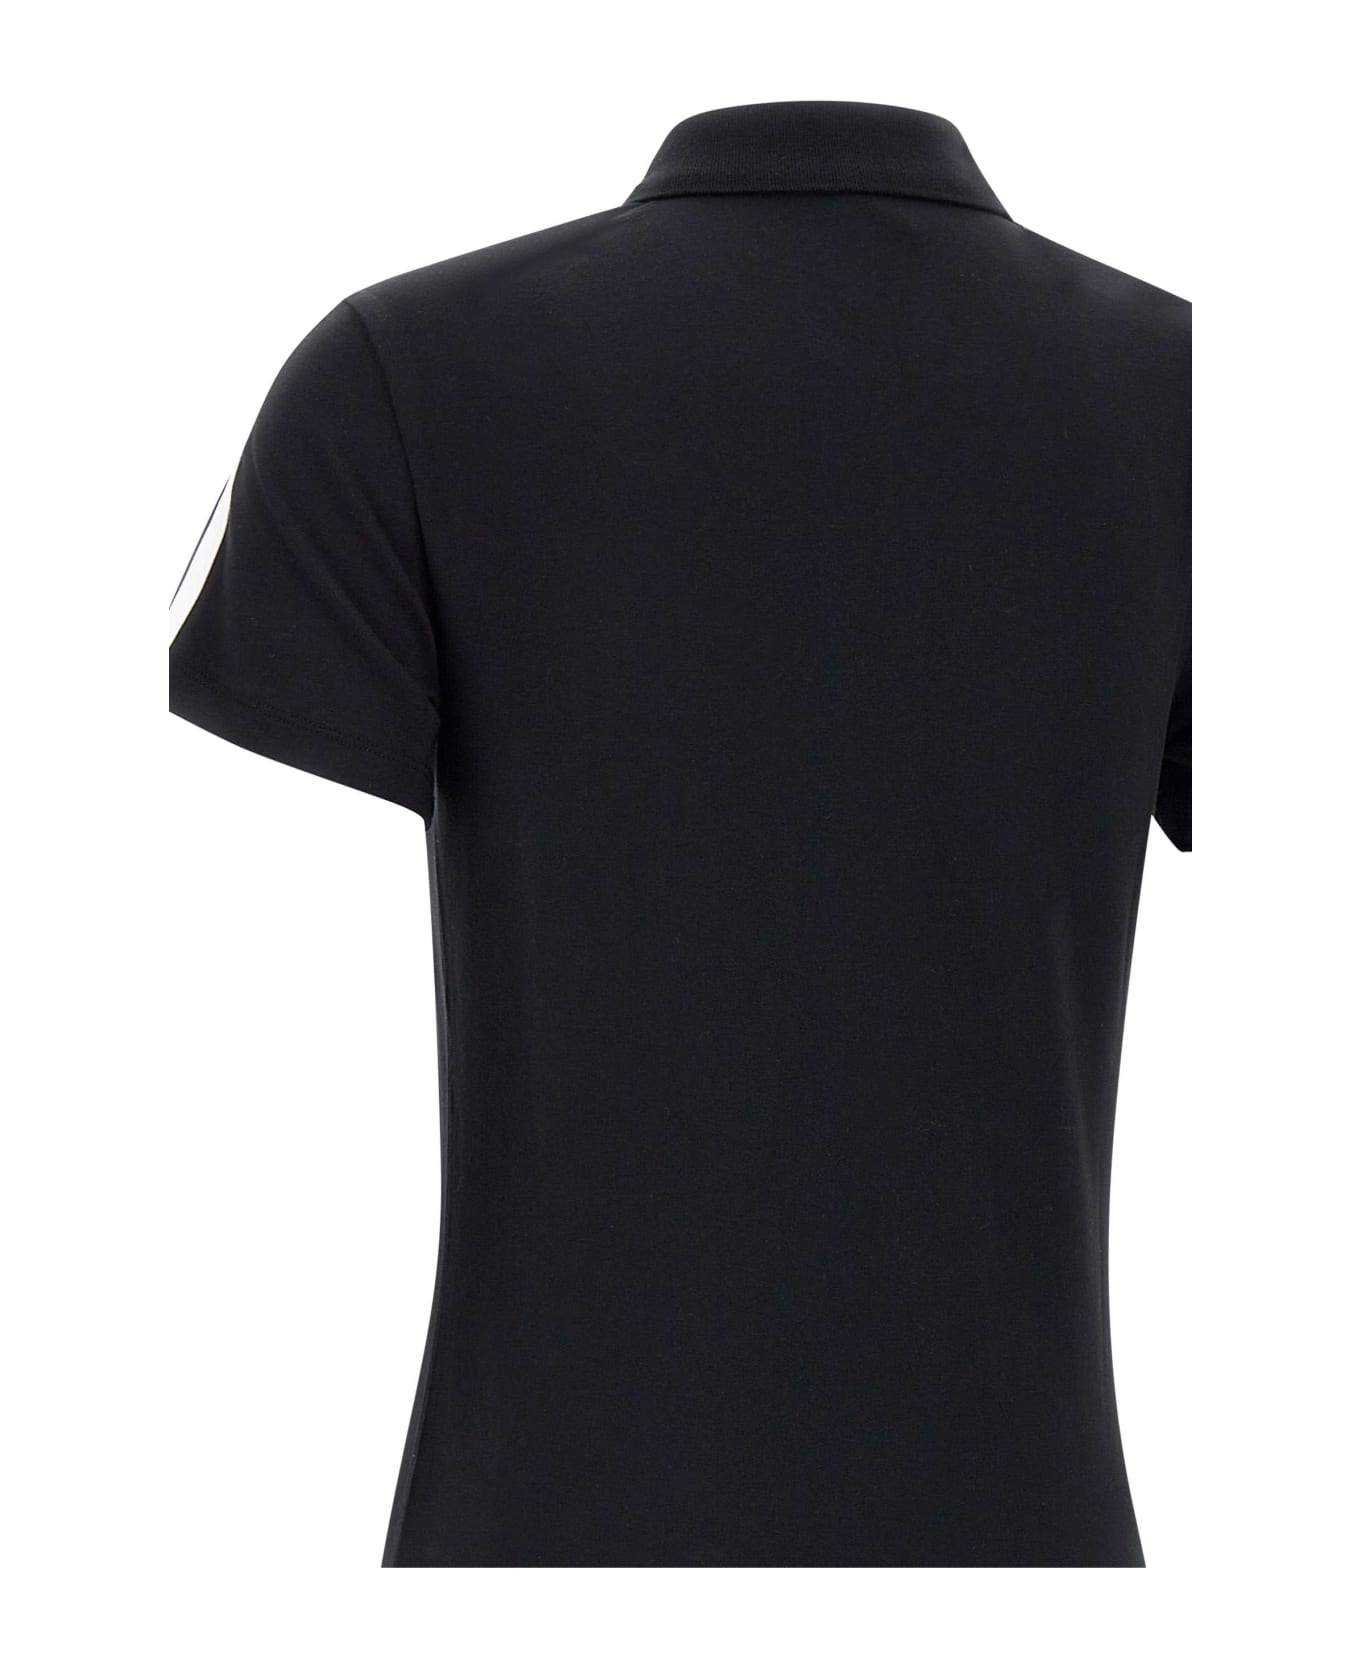 Adidas "soccer" Cotton Dress - BLACK ポロシャツ